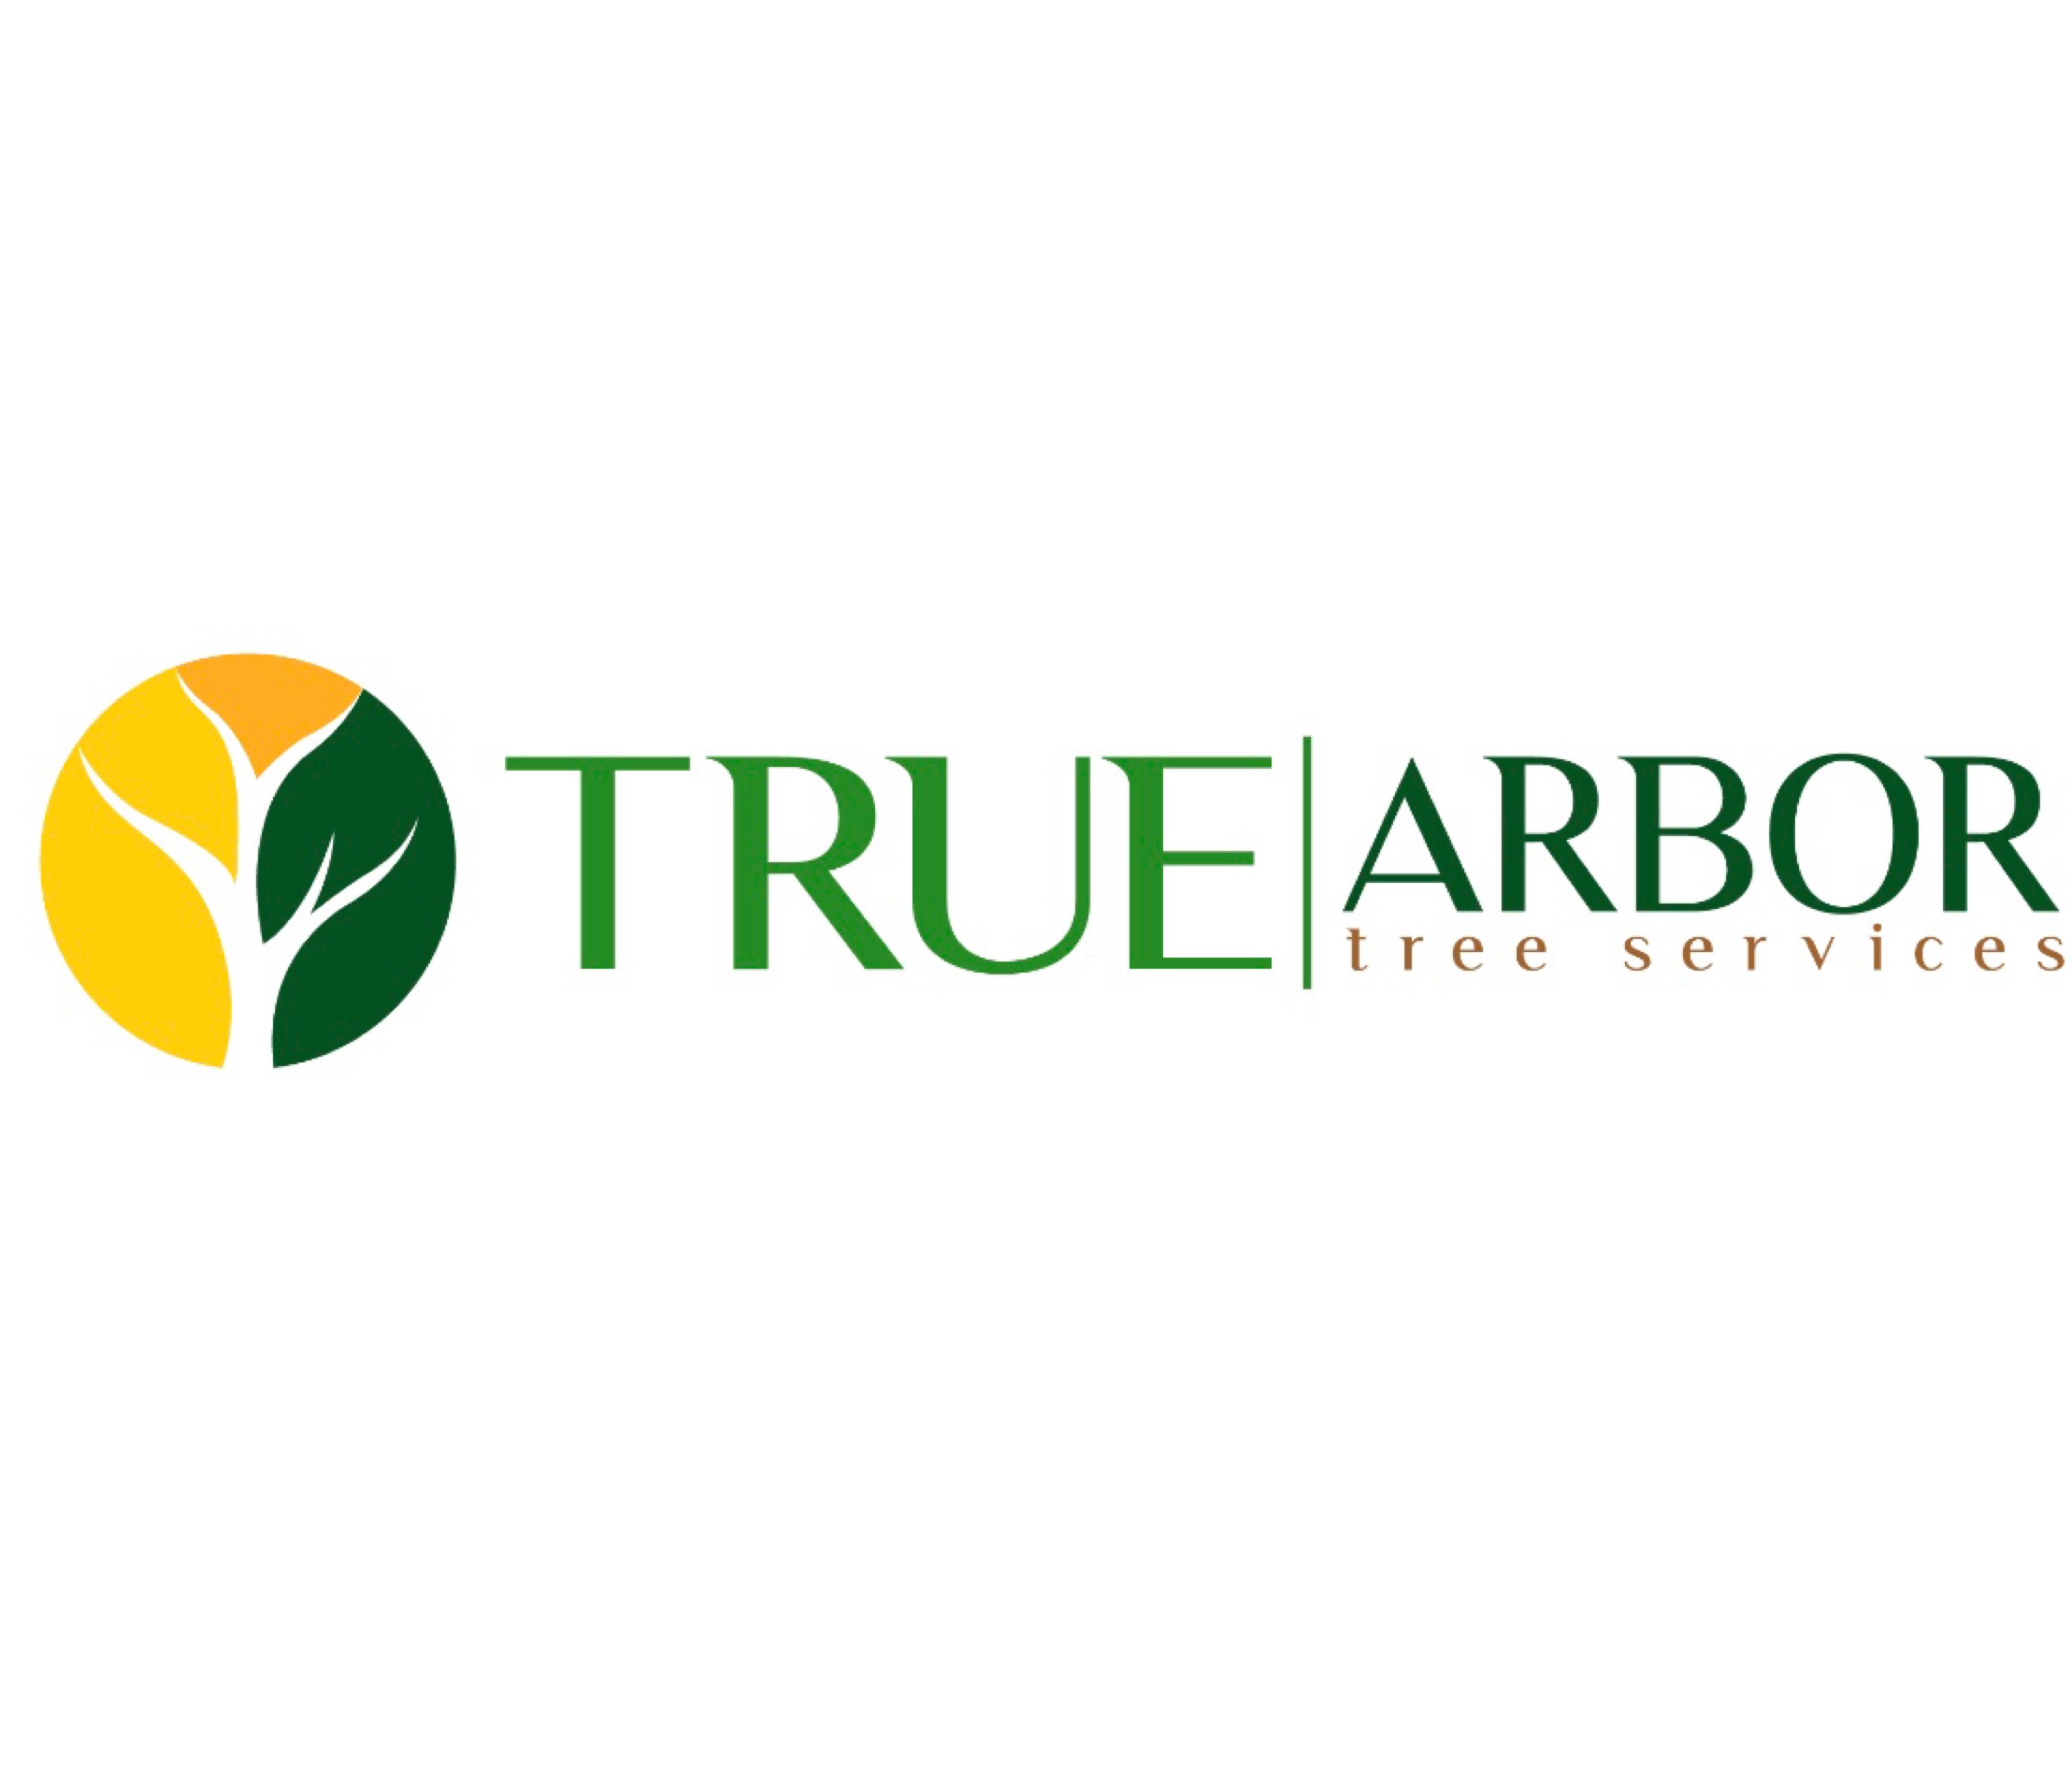 True Arbor Tree Services Logo